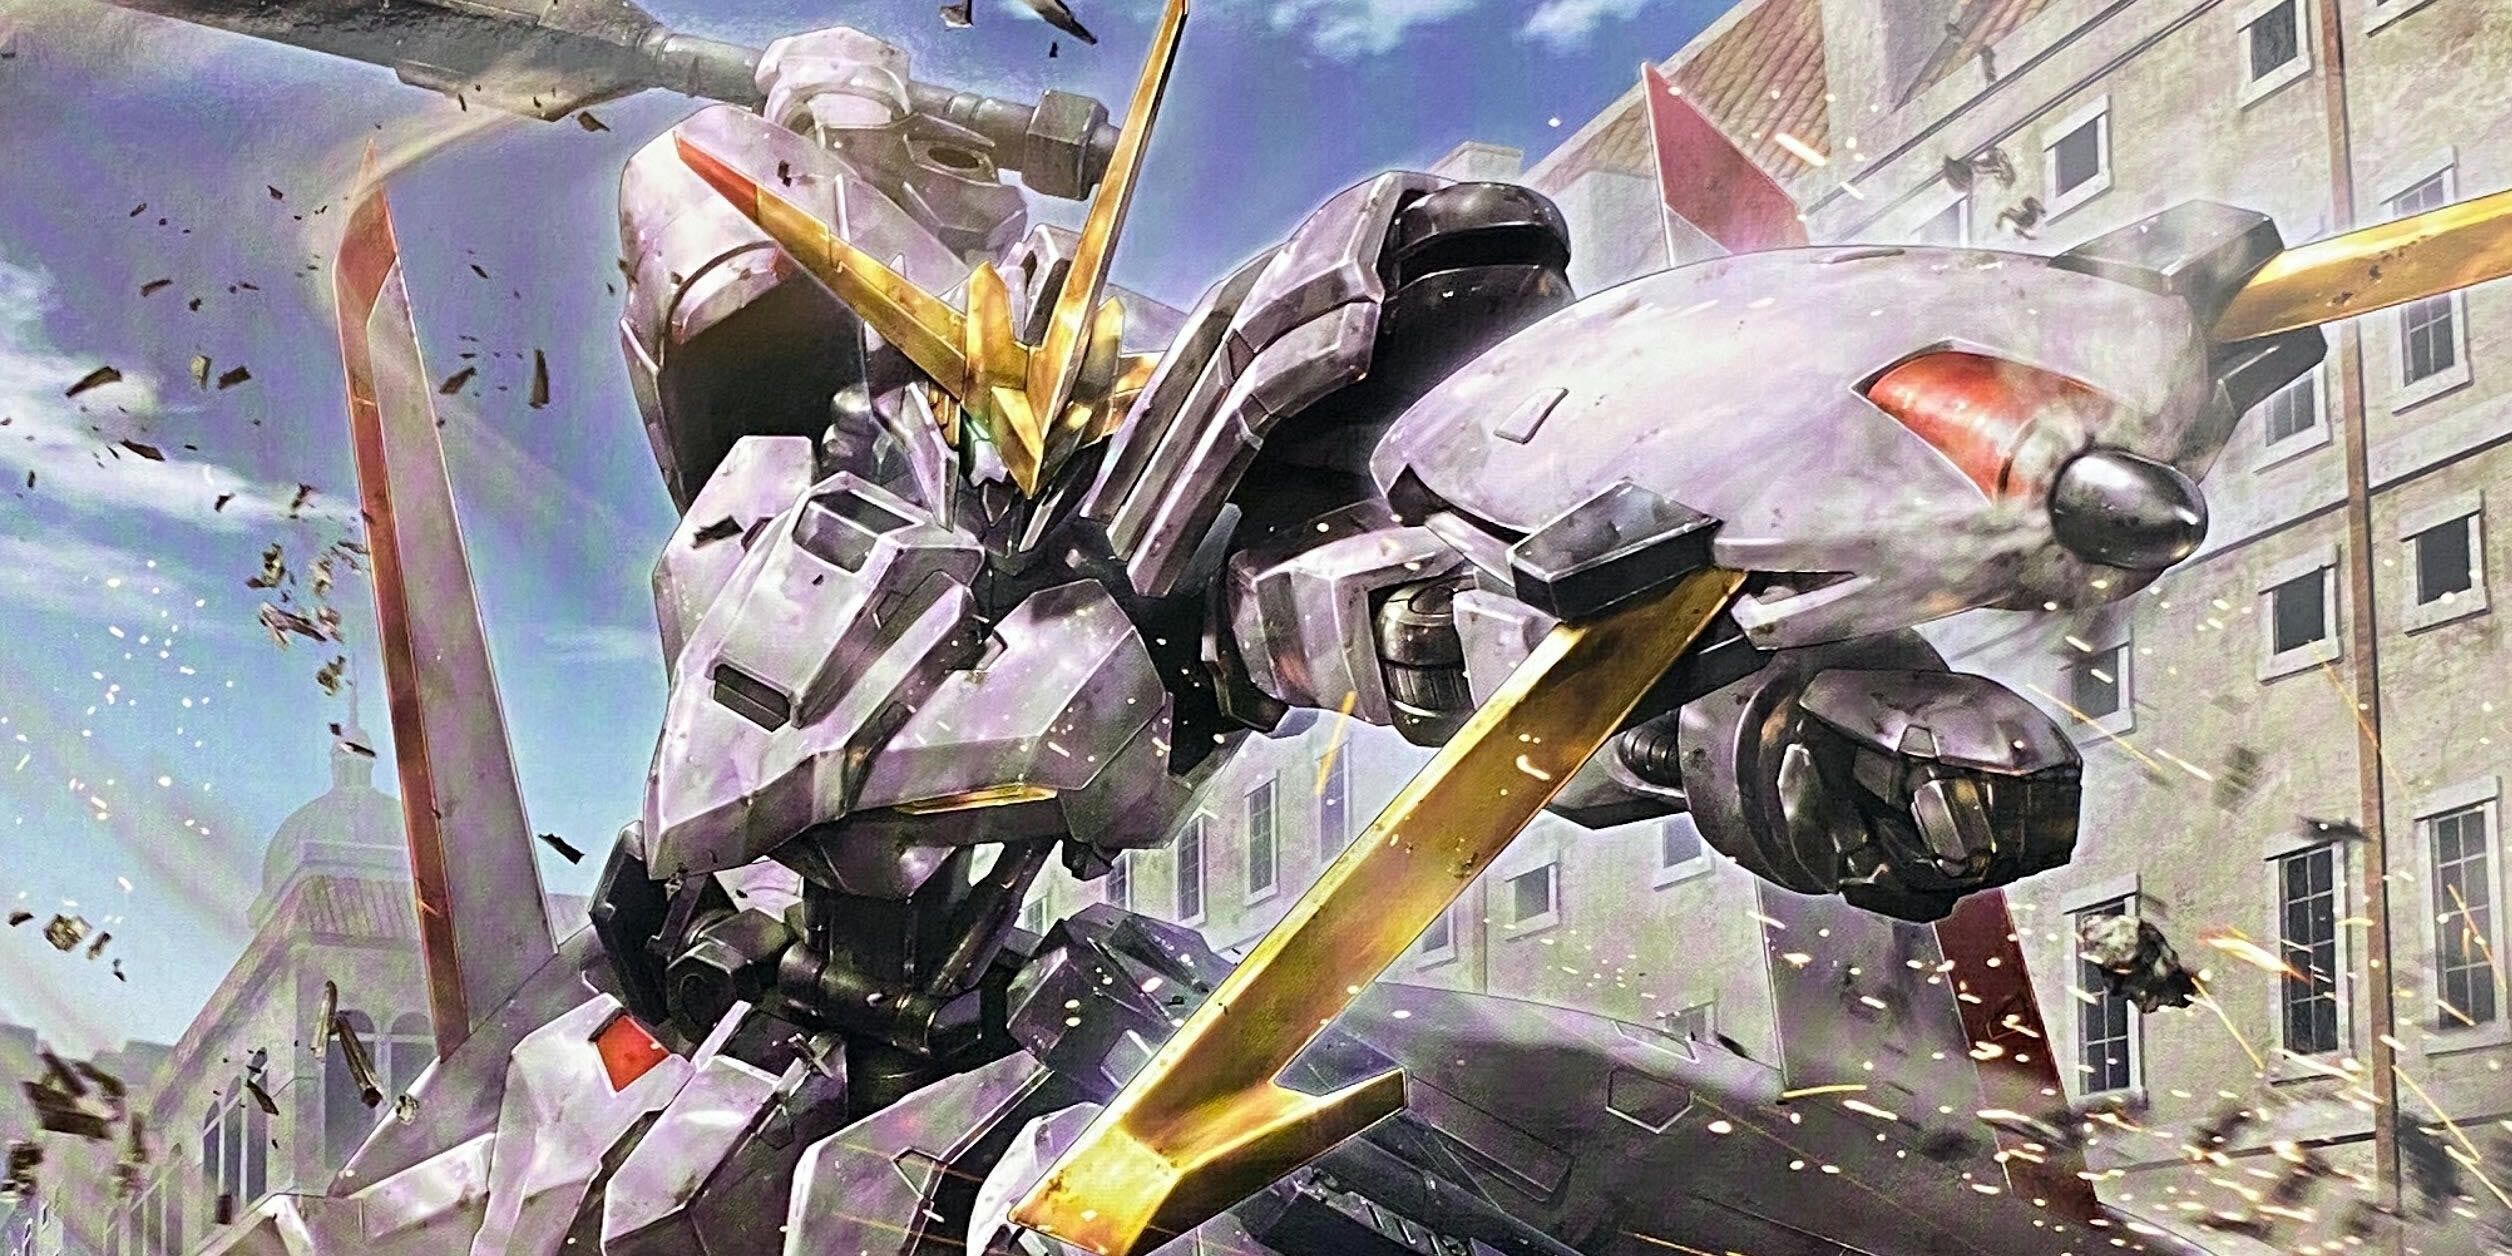 Se anuncia un sorprendente spin-off del querido anime Gundam... con una captura extraña